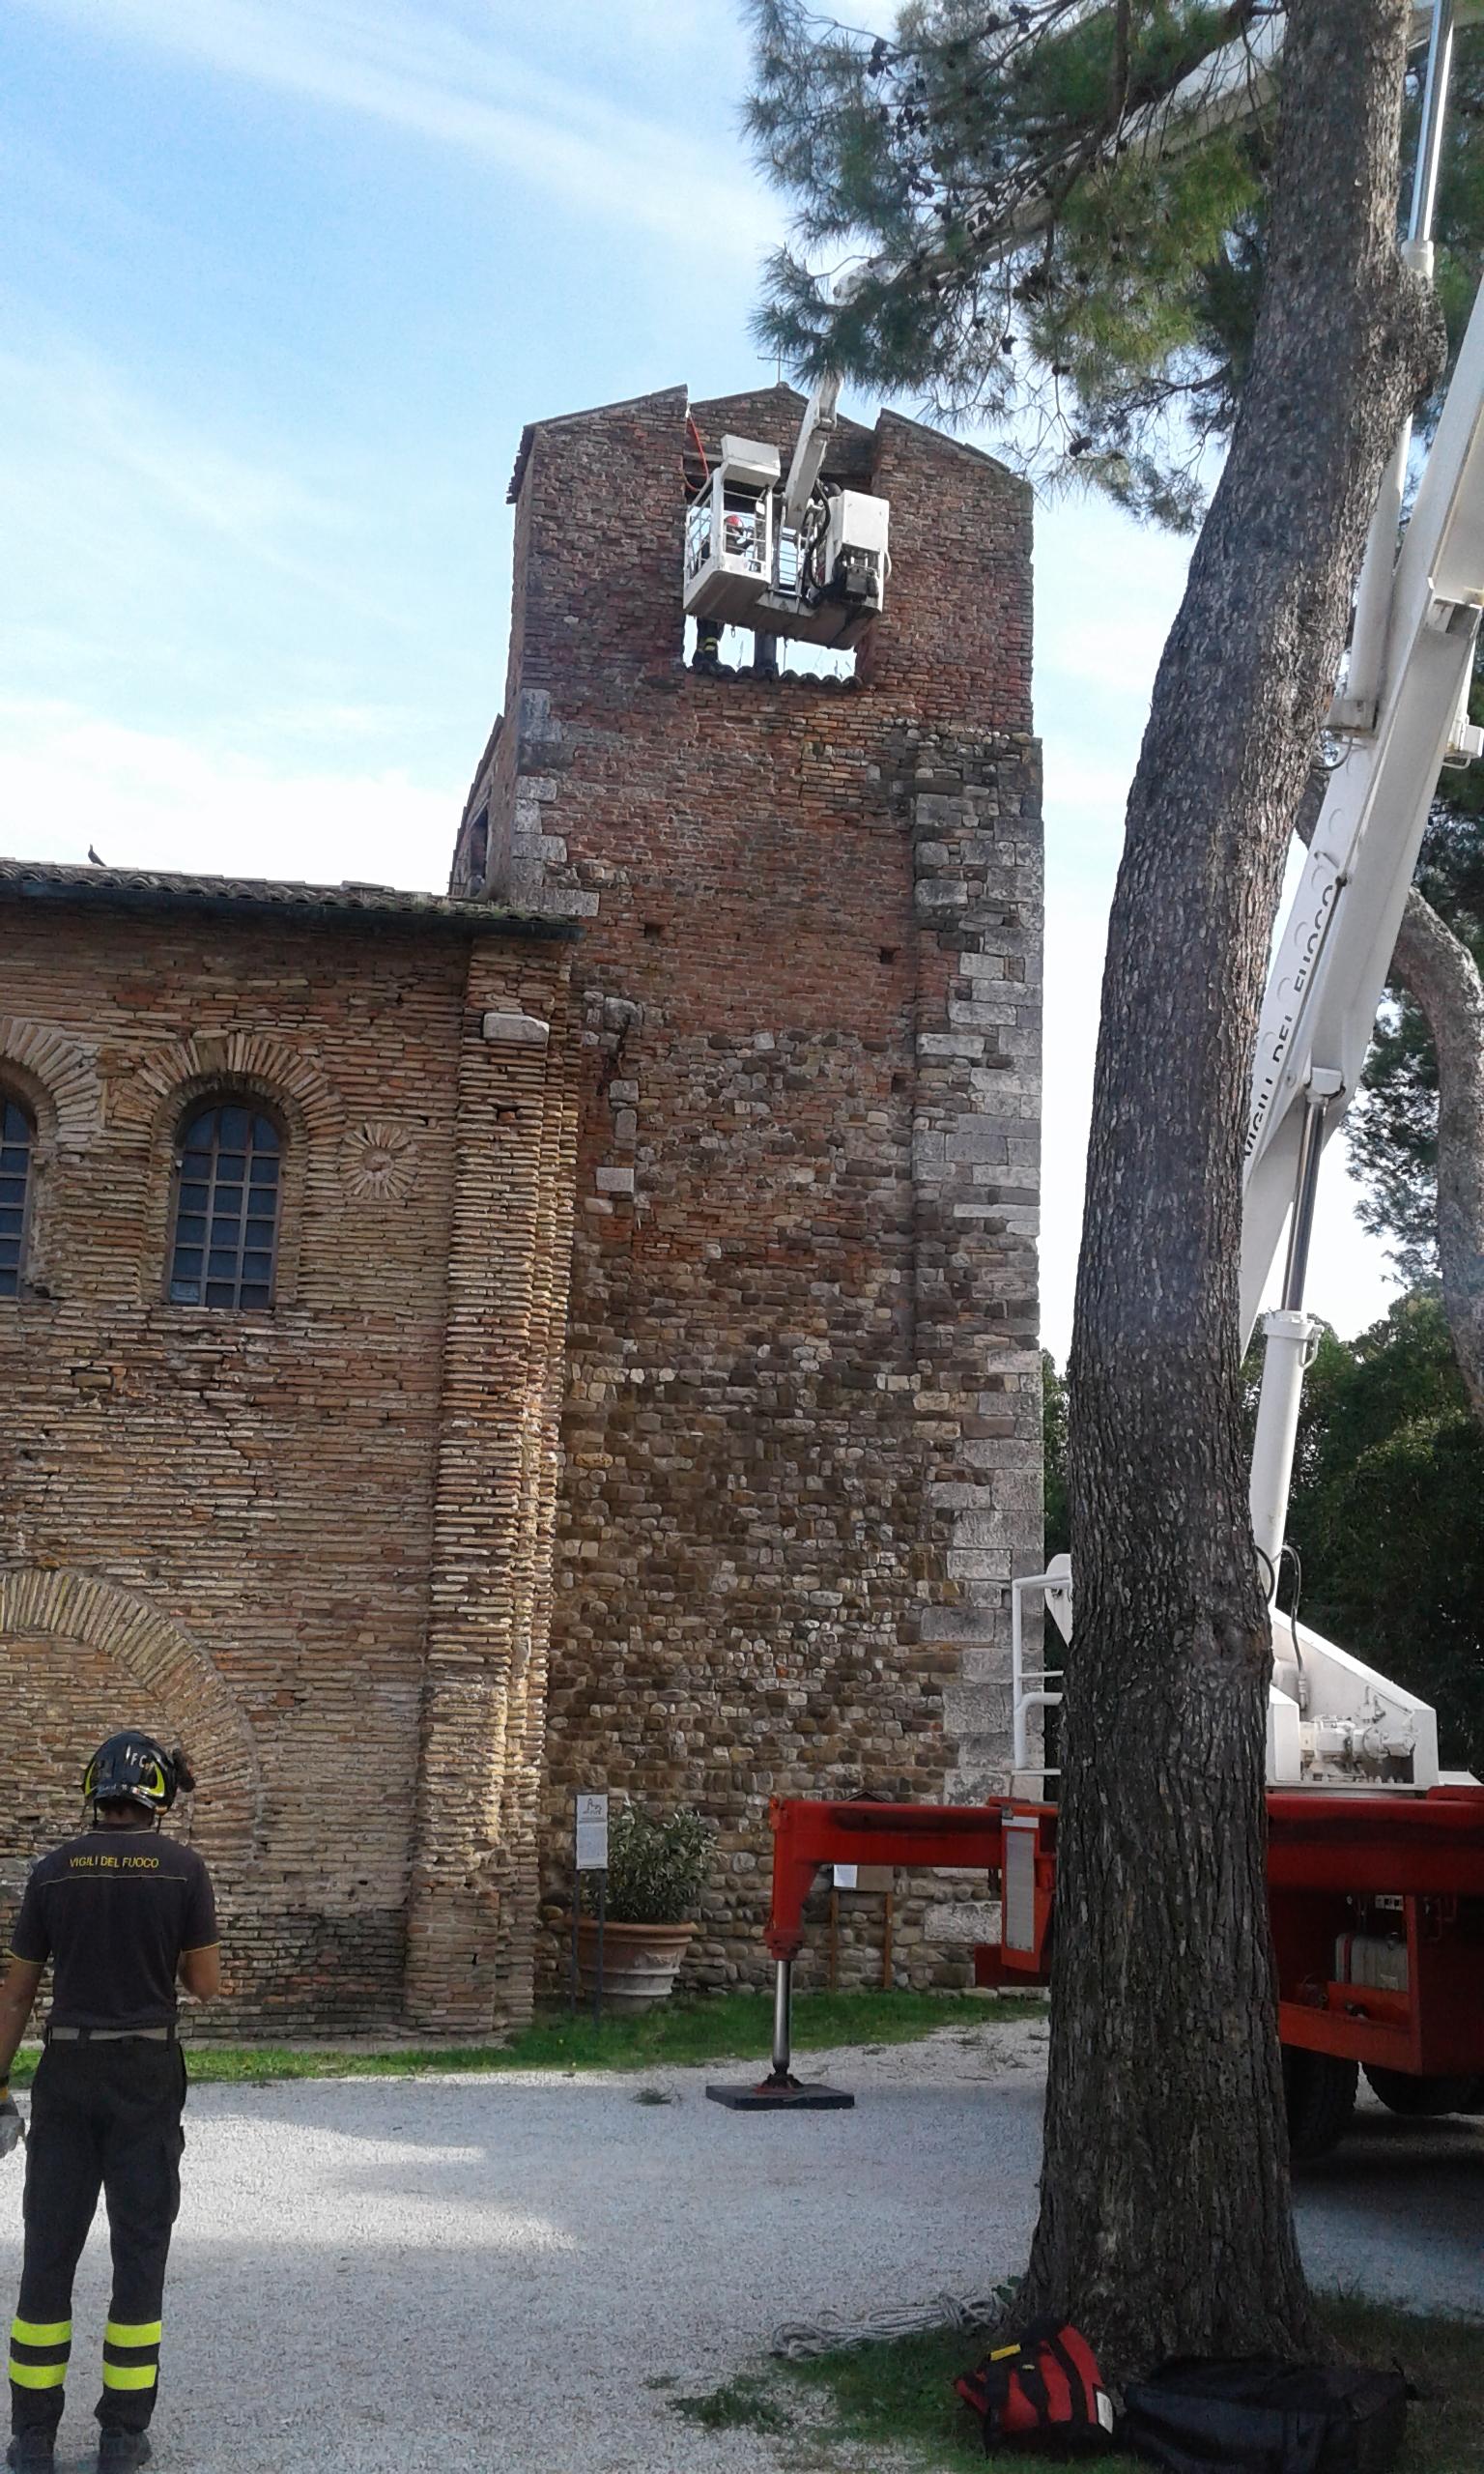 Messa in sicurezza campanile Santarcangelo di Romagna I